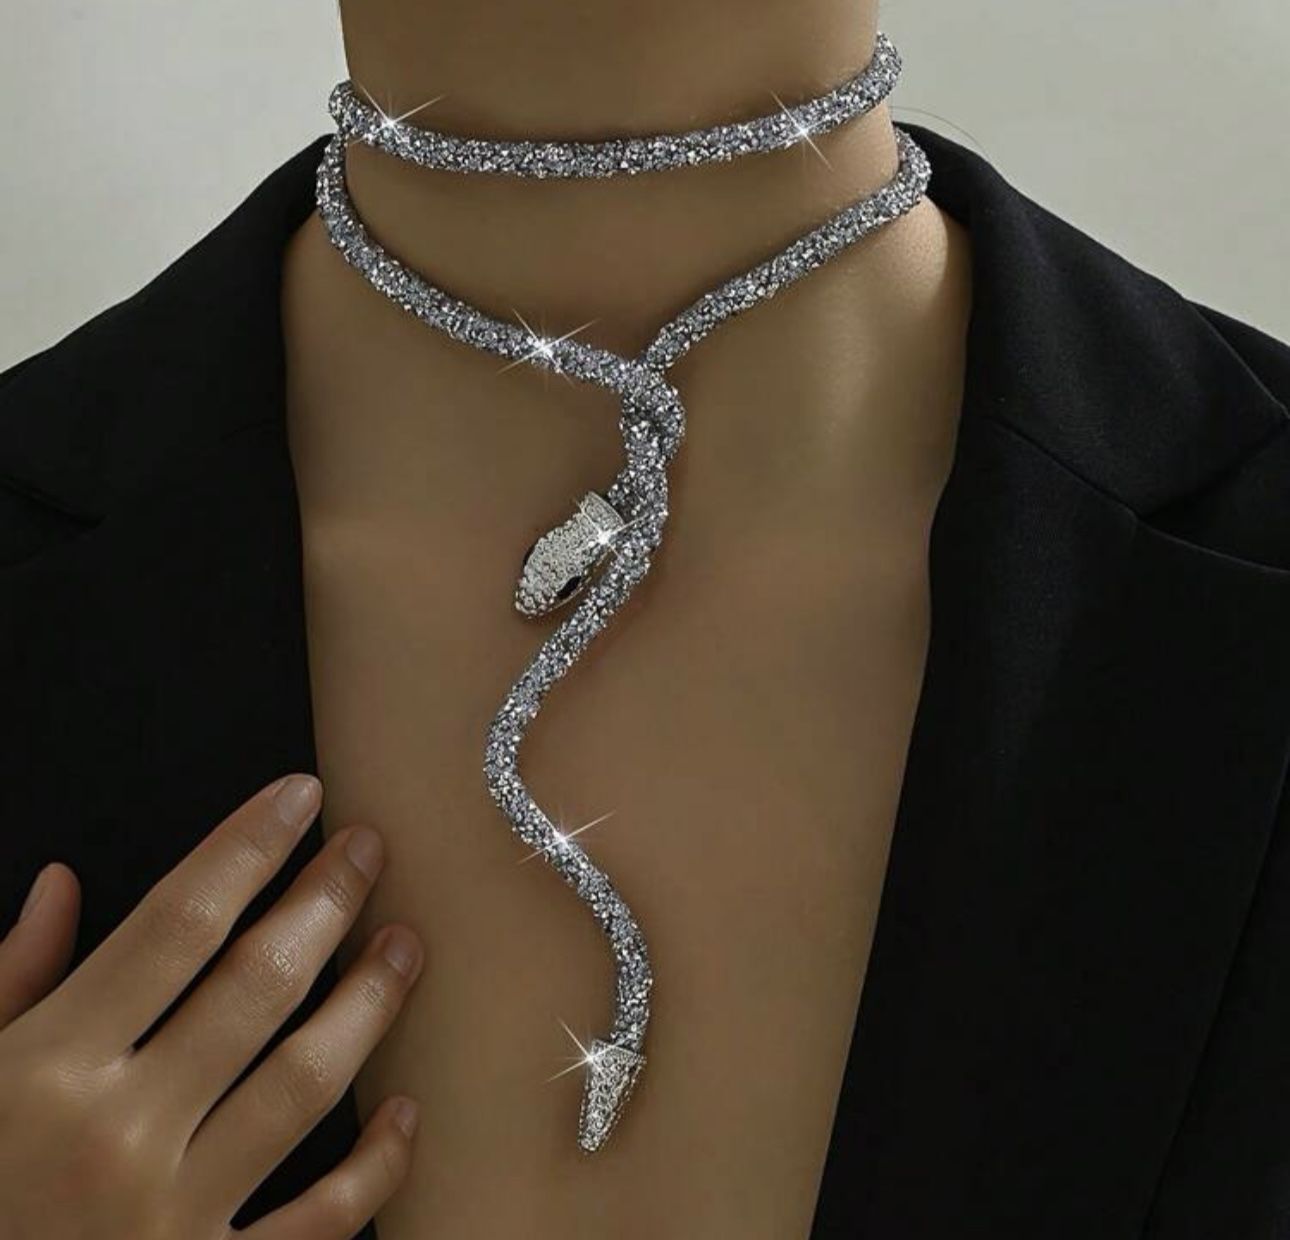 Snake 🐍 Wrap Around Necklace $6